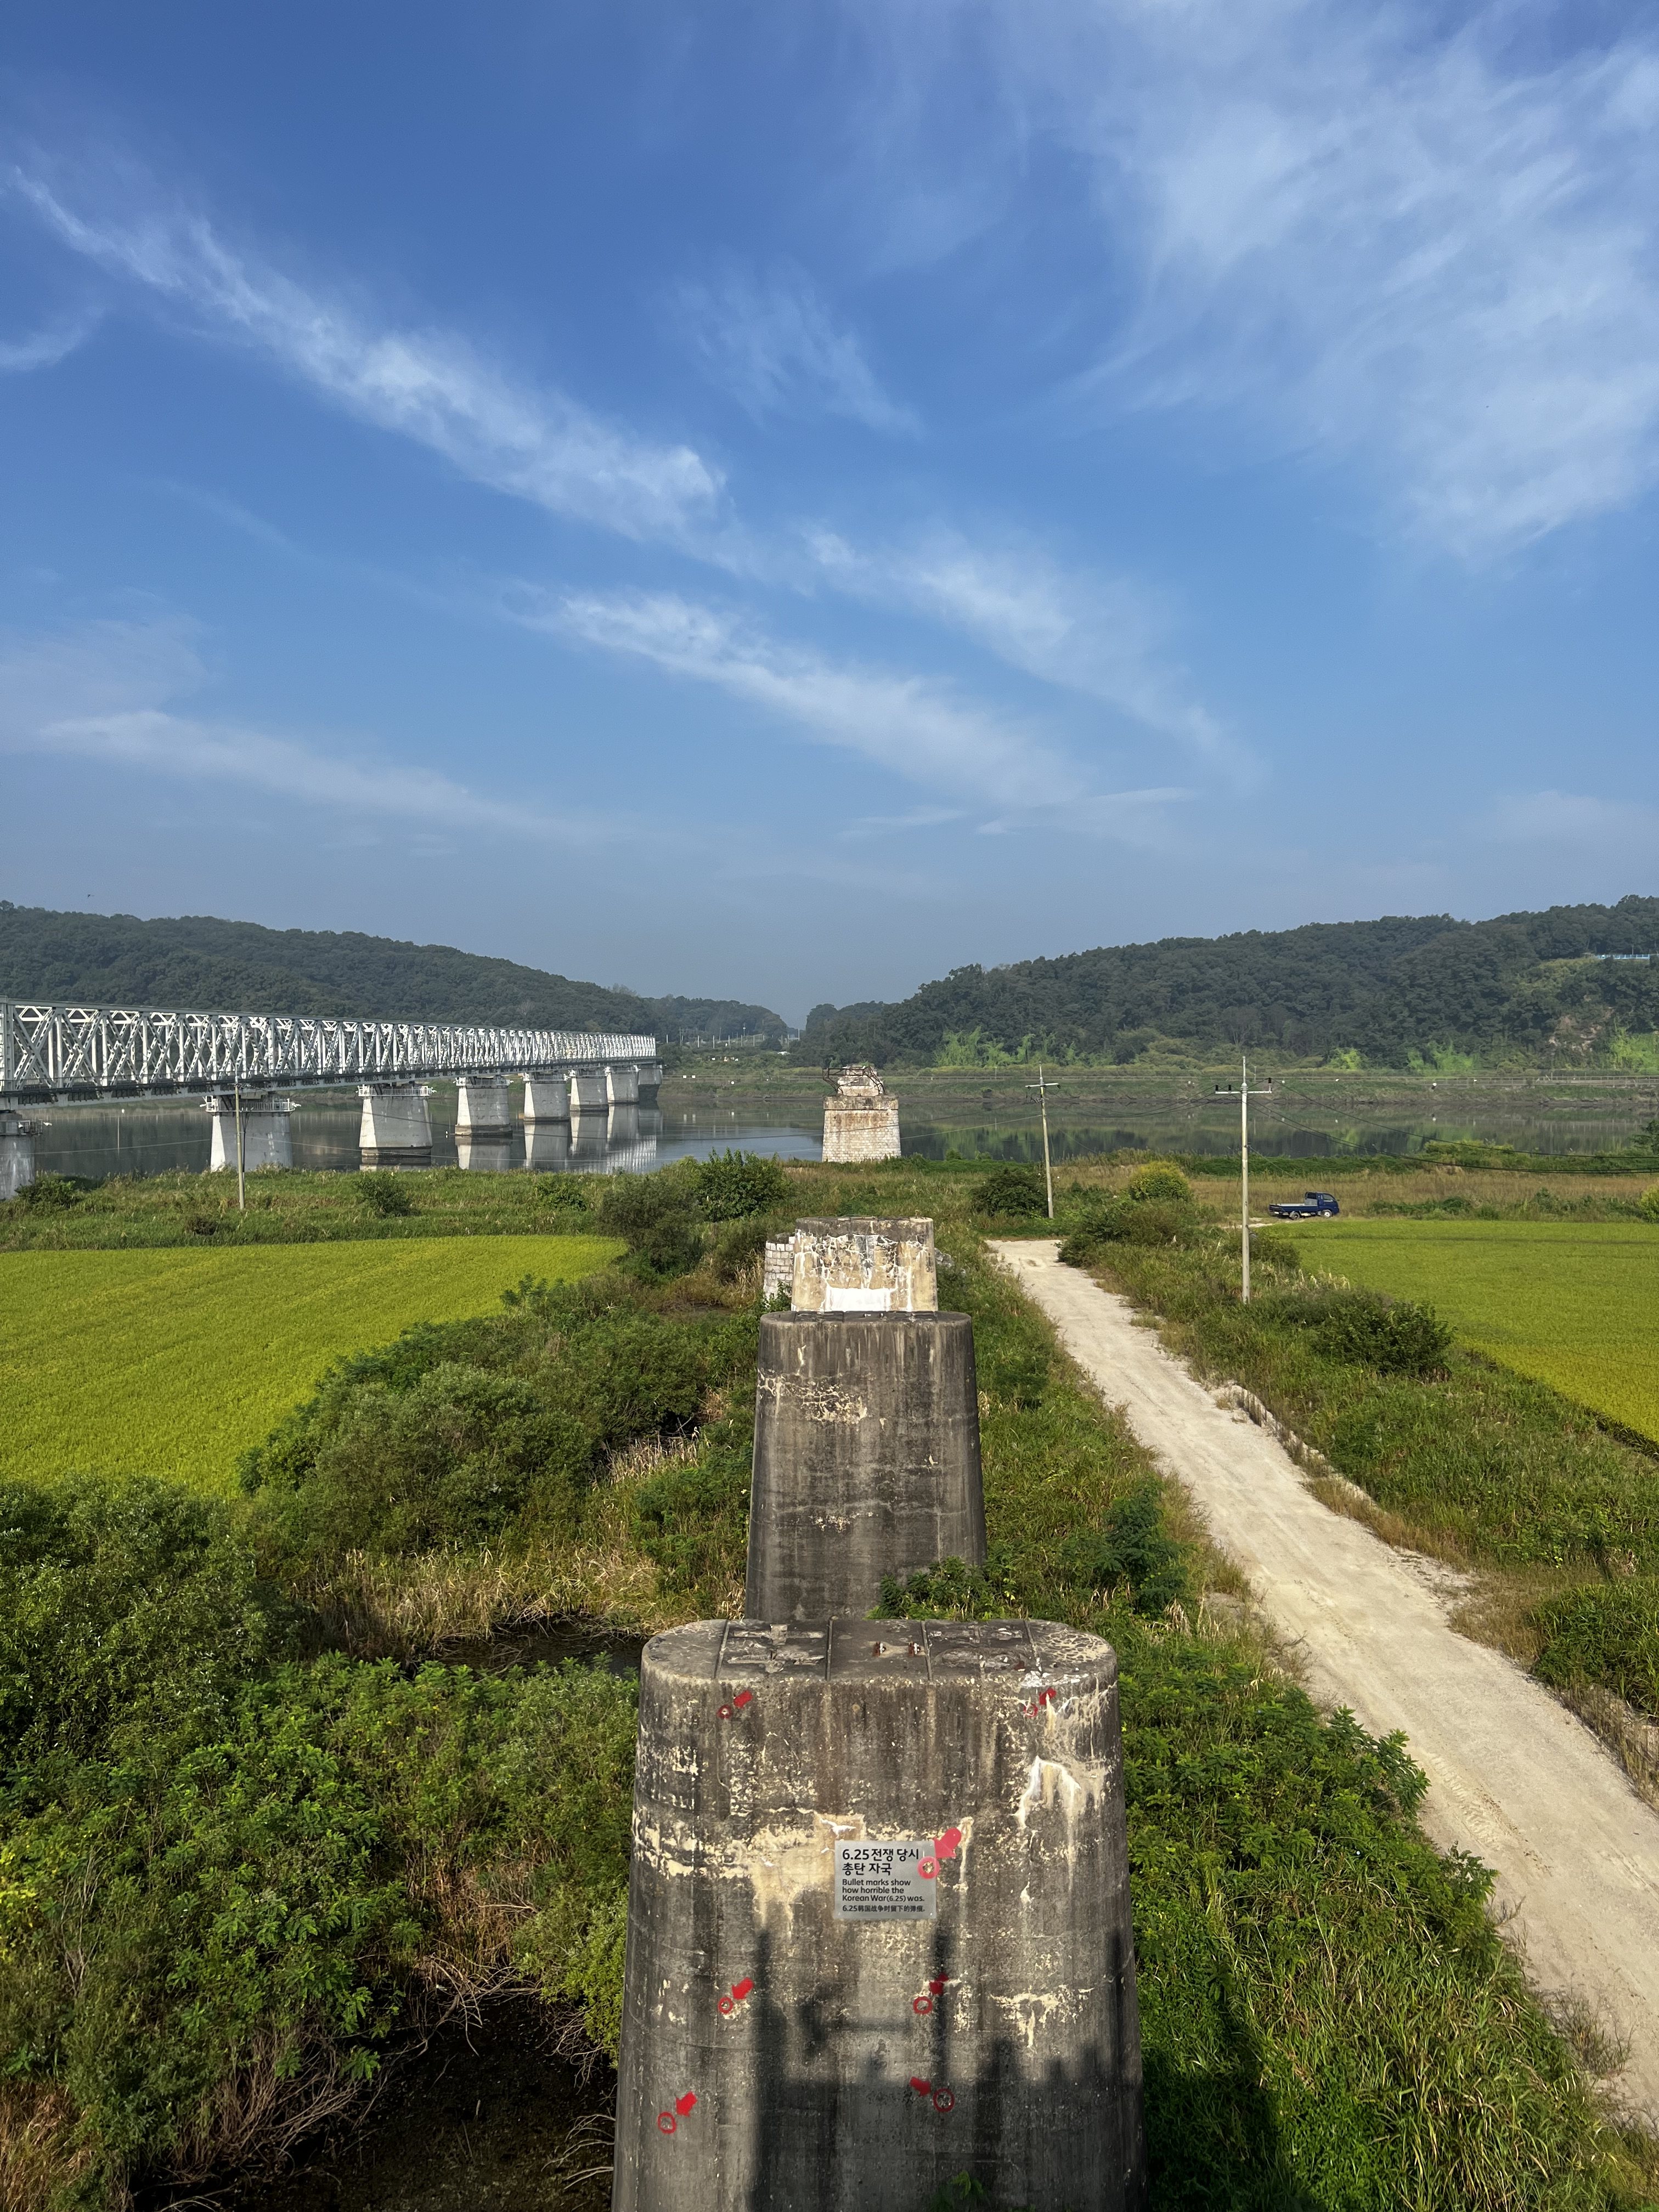 Piers of the old Dokgae Bridge amid the lush greenery of the Demilitarized Zone (DMZ) in South Korea. Photo: Erika Na